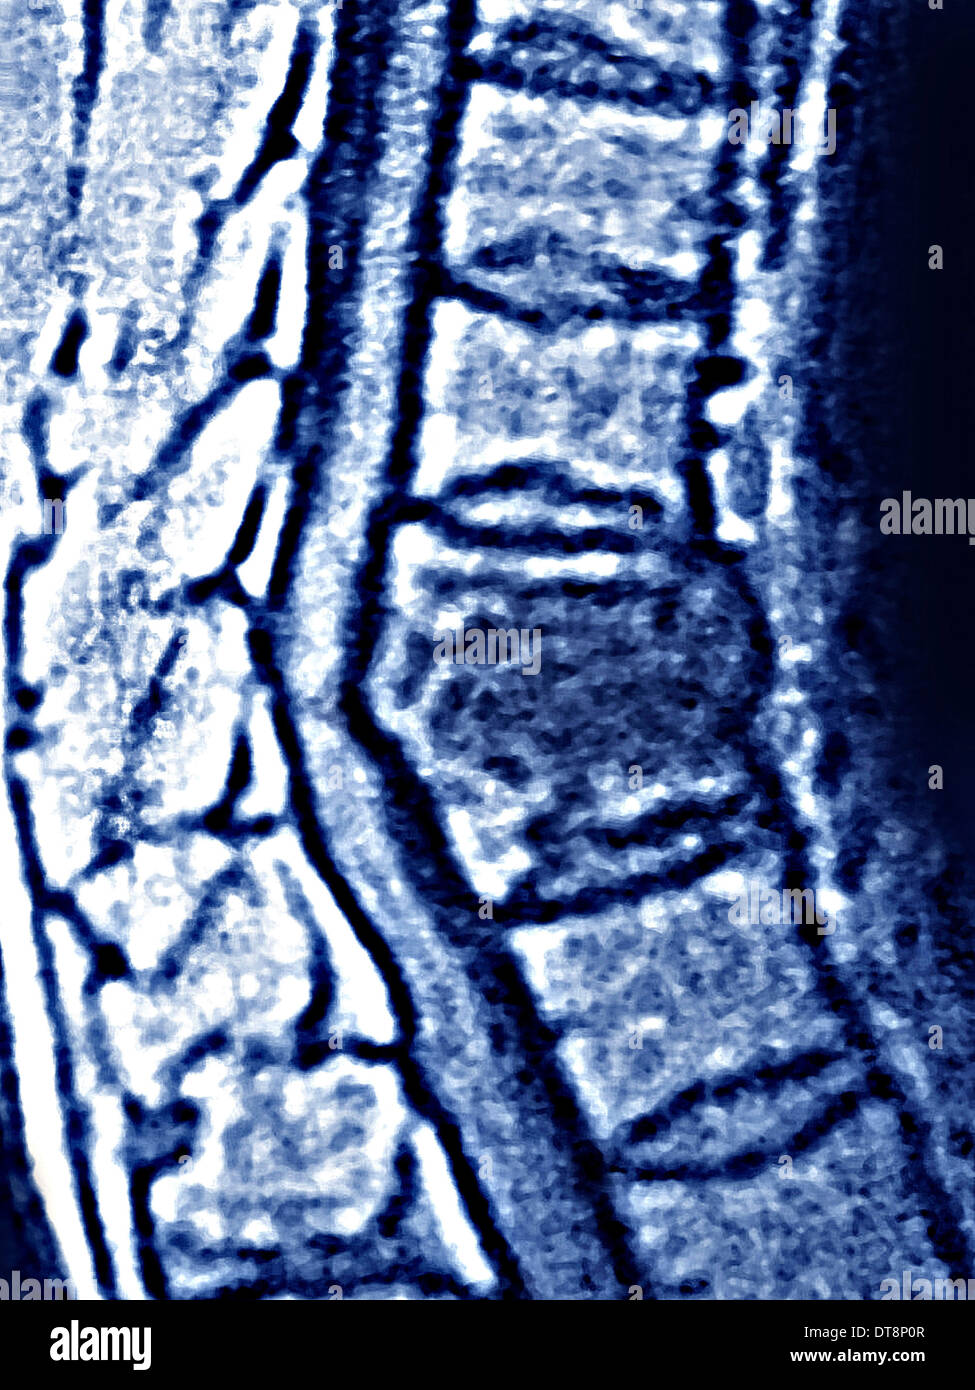 TUBERCULOSIS IN THE BONES, MRI Stock Photo